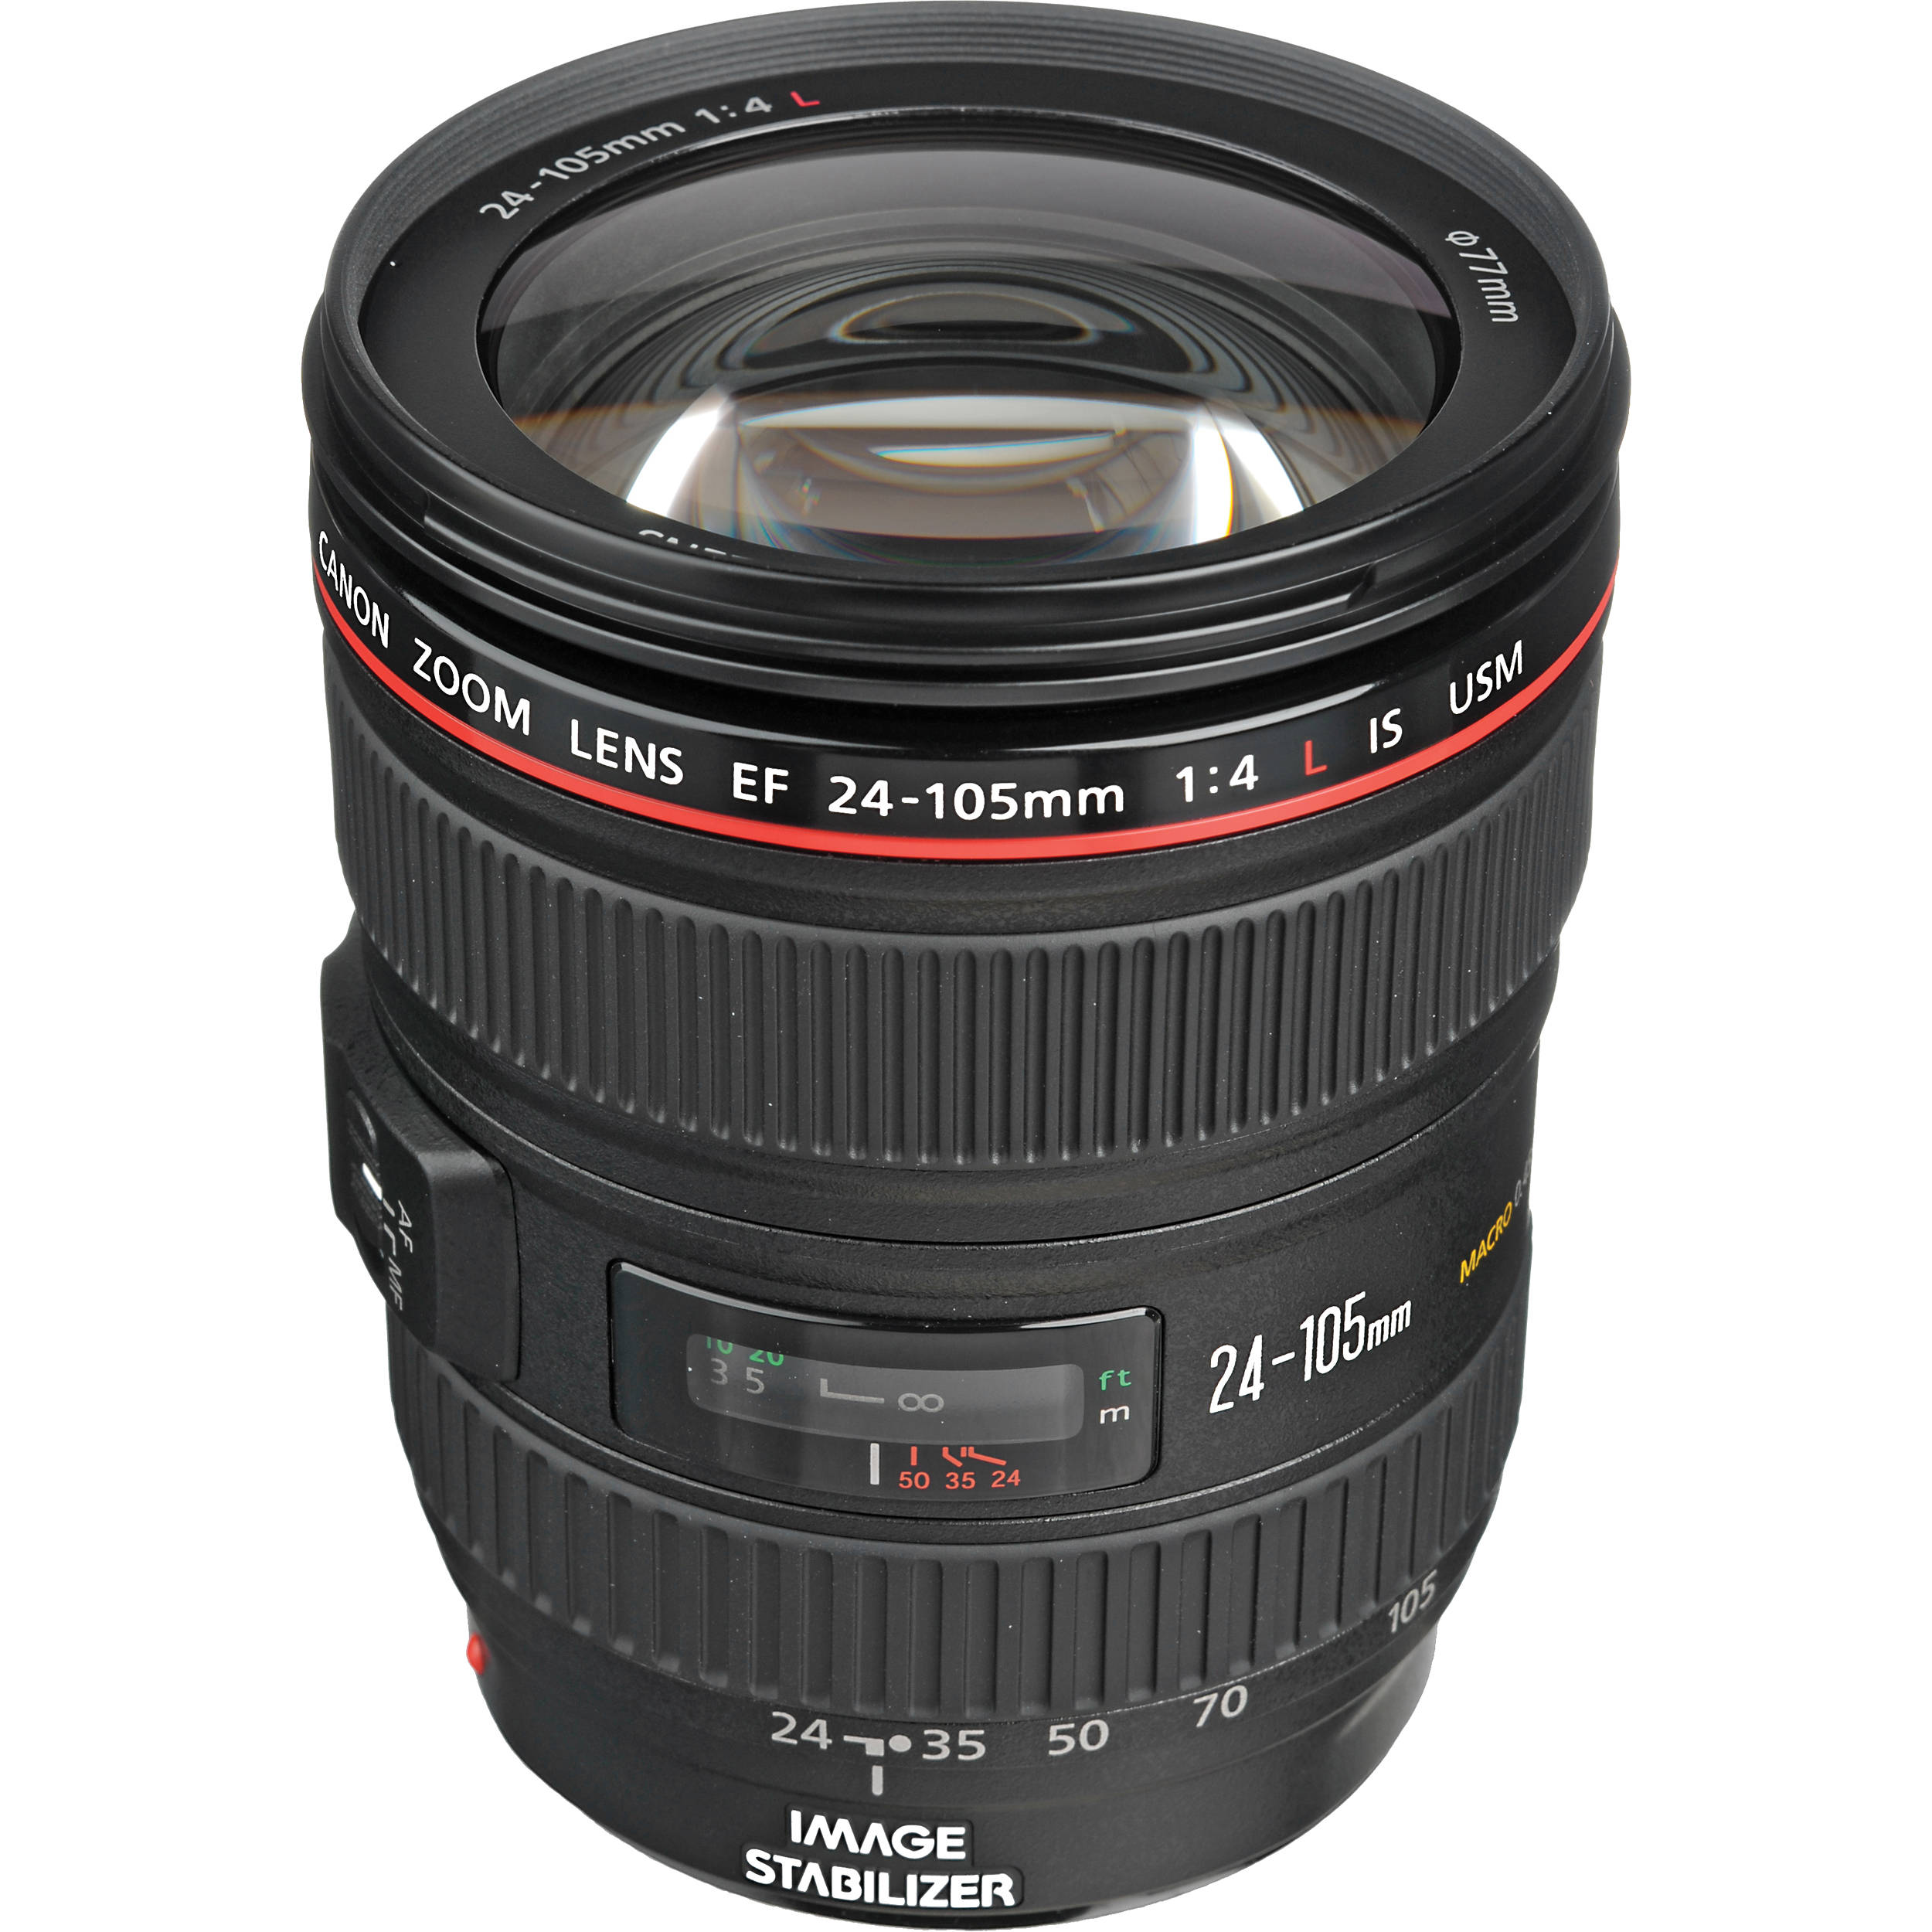 Canon EF 24-105mm f / 4L USM 이미지 스태빌라이저 렌즈 (77mm)